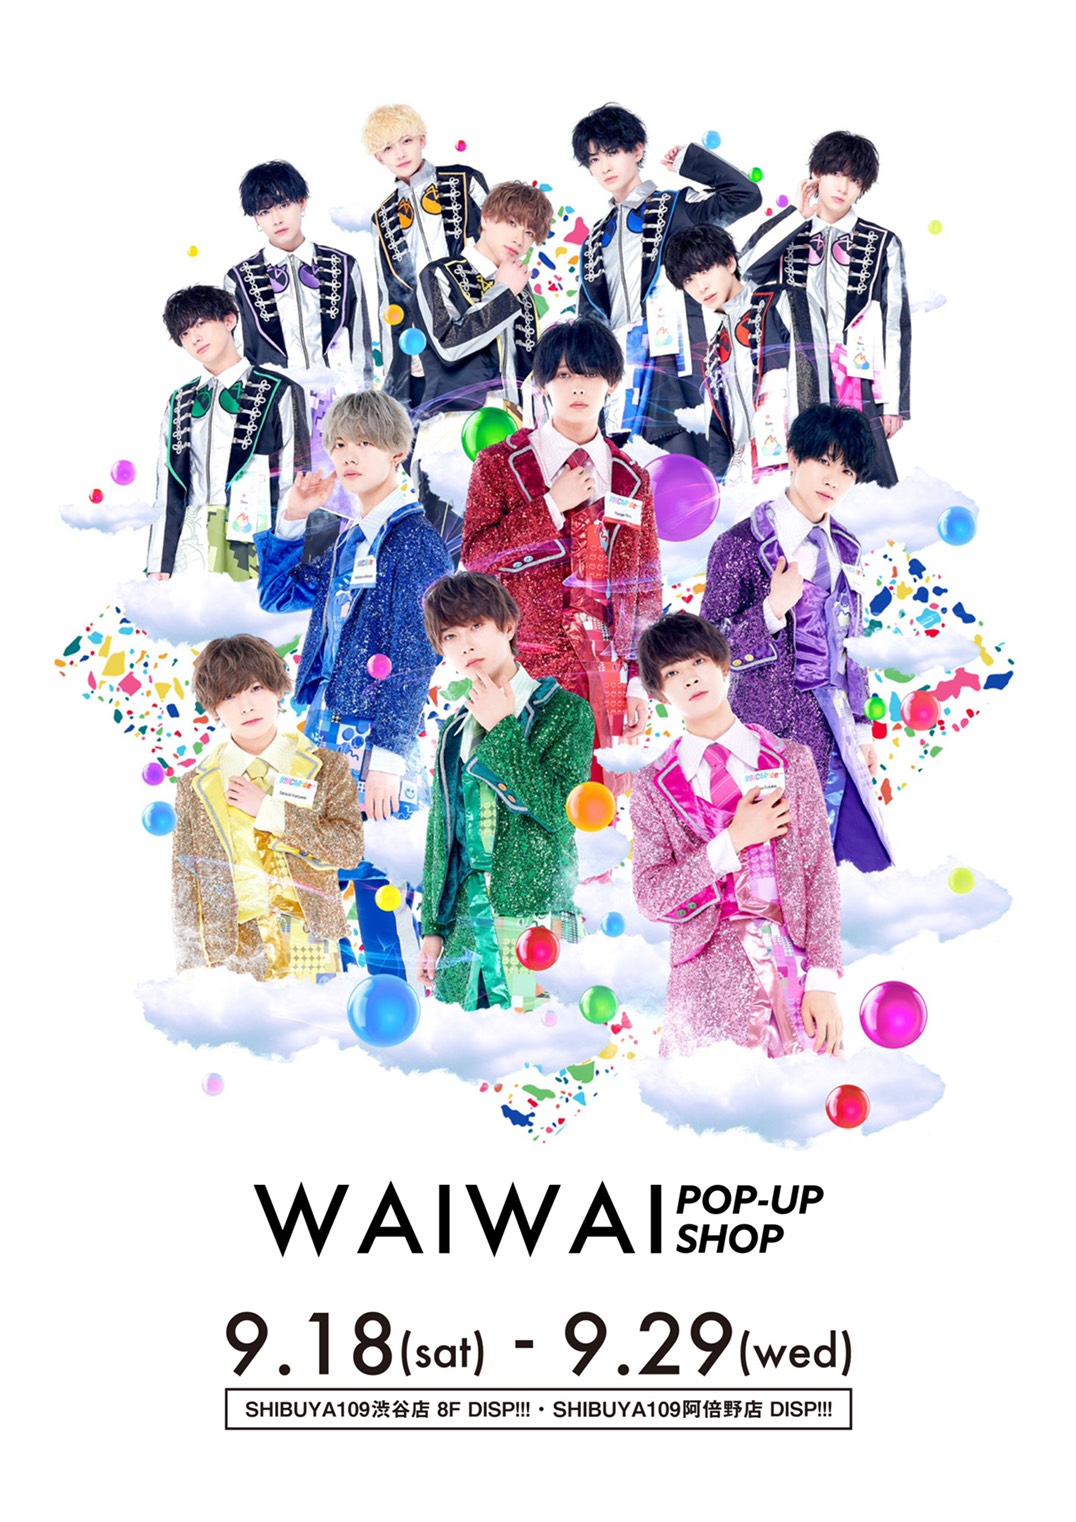 WAIWAI POP-UP SHOP SHIBUYA109 渋谷店